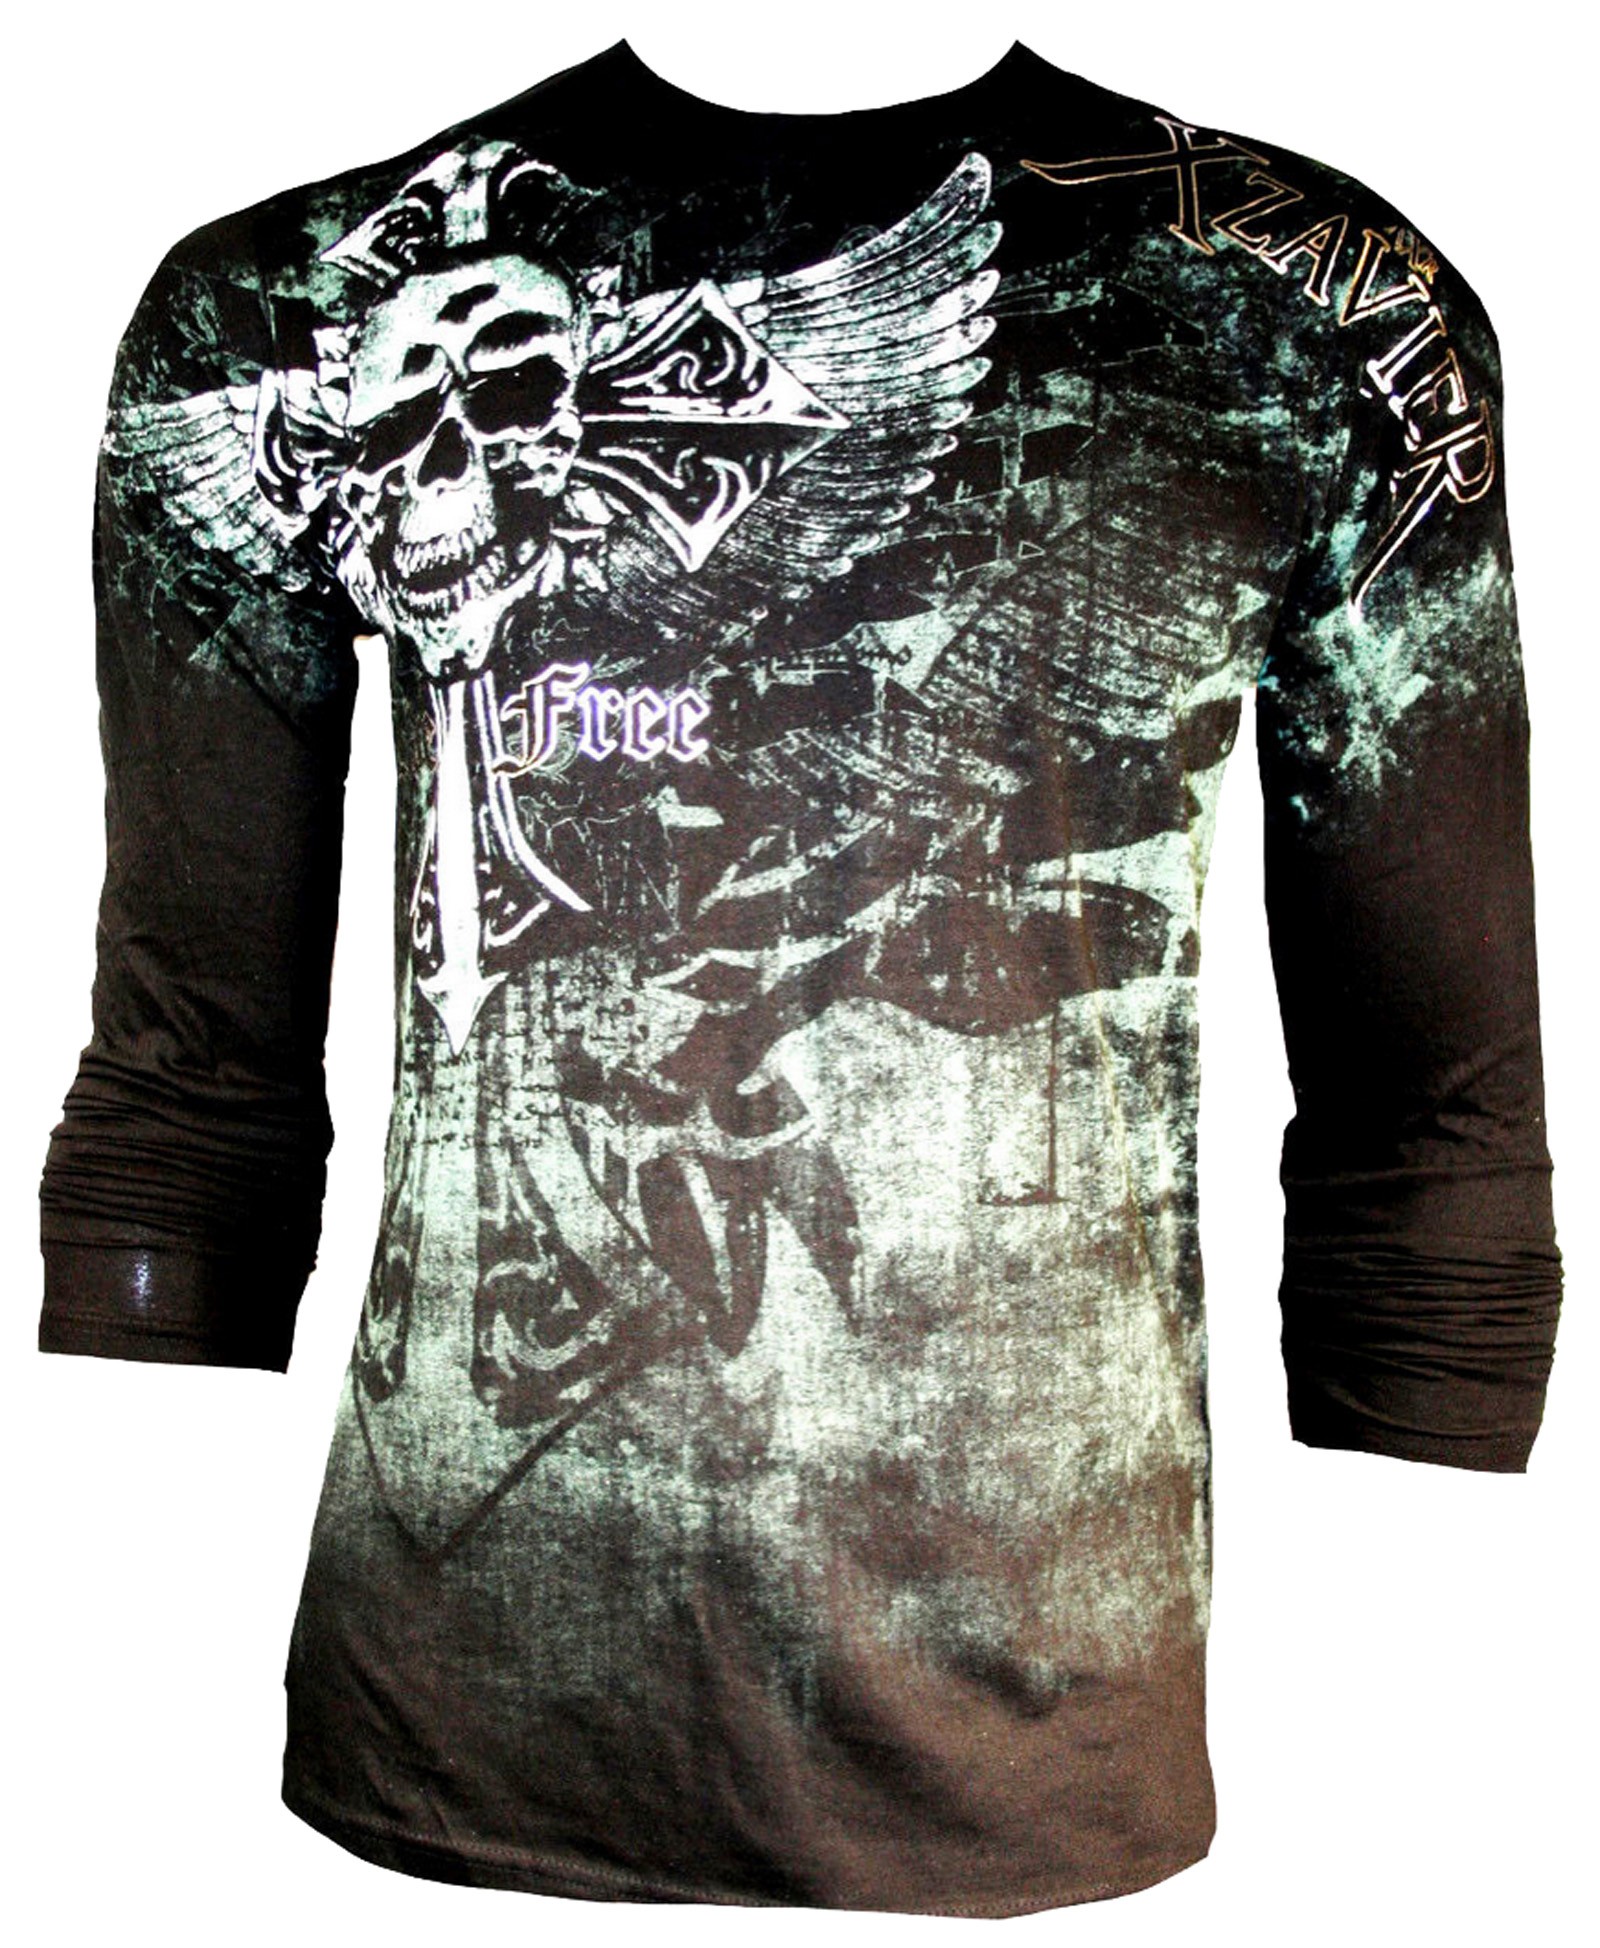 Xzavier - Iron Cross Skull Longsleeve T-Shirt Front